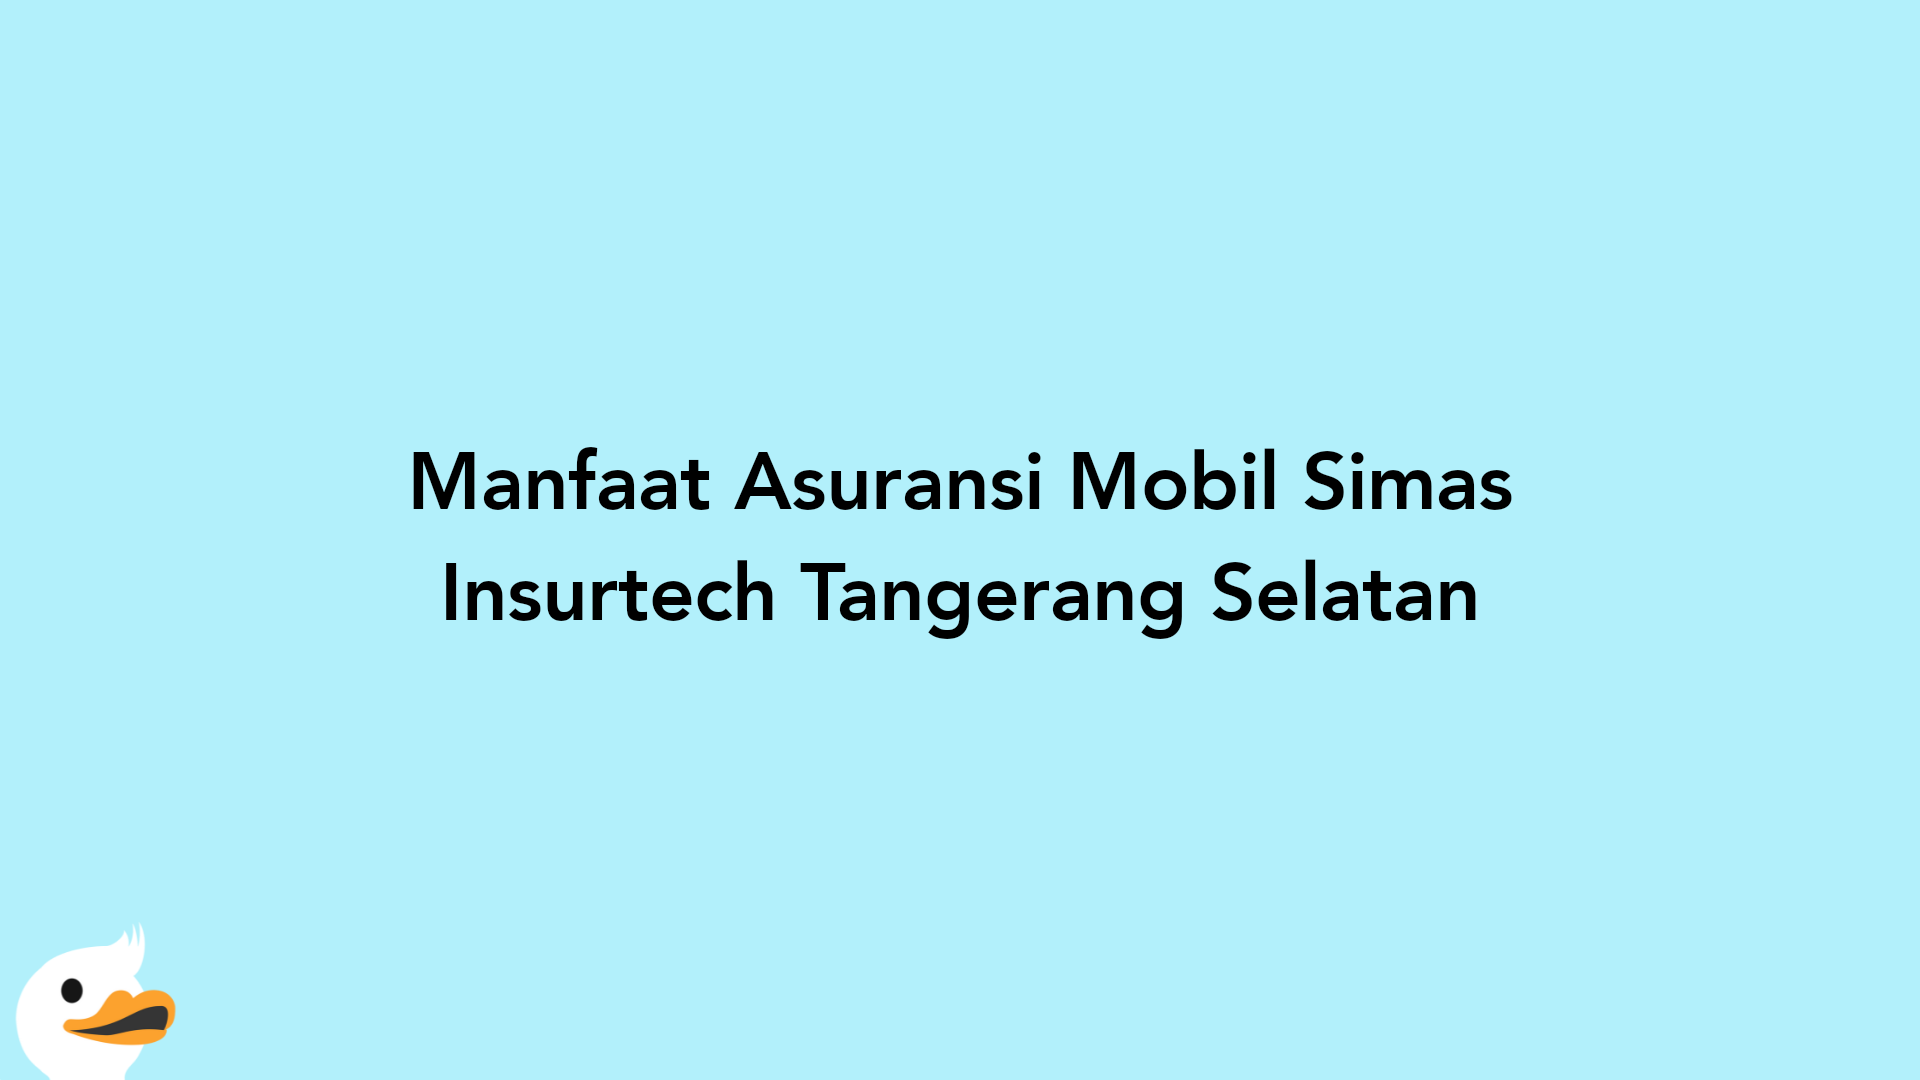 Manfaat Asuransi Mobil Simas Insurtech Tangerang Selatan